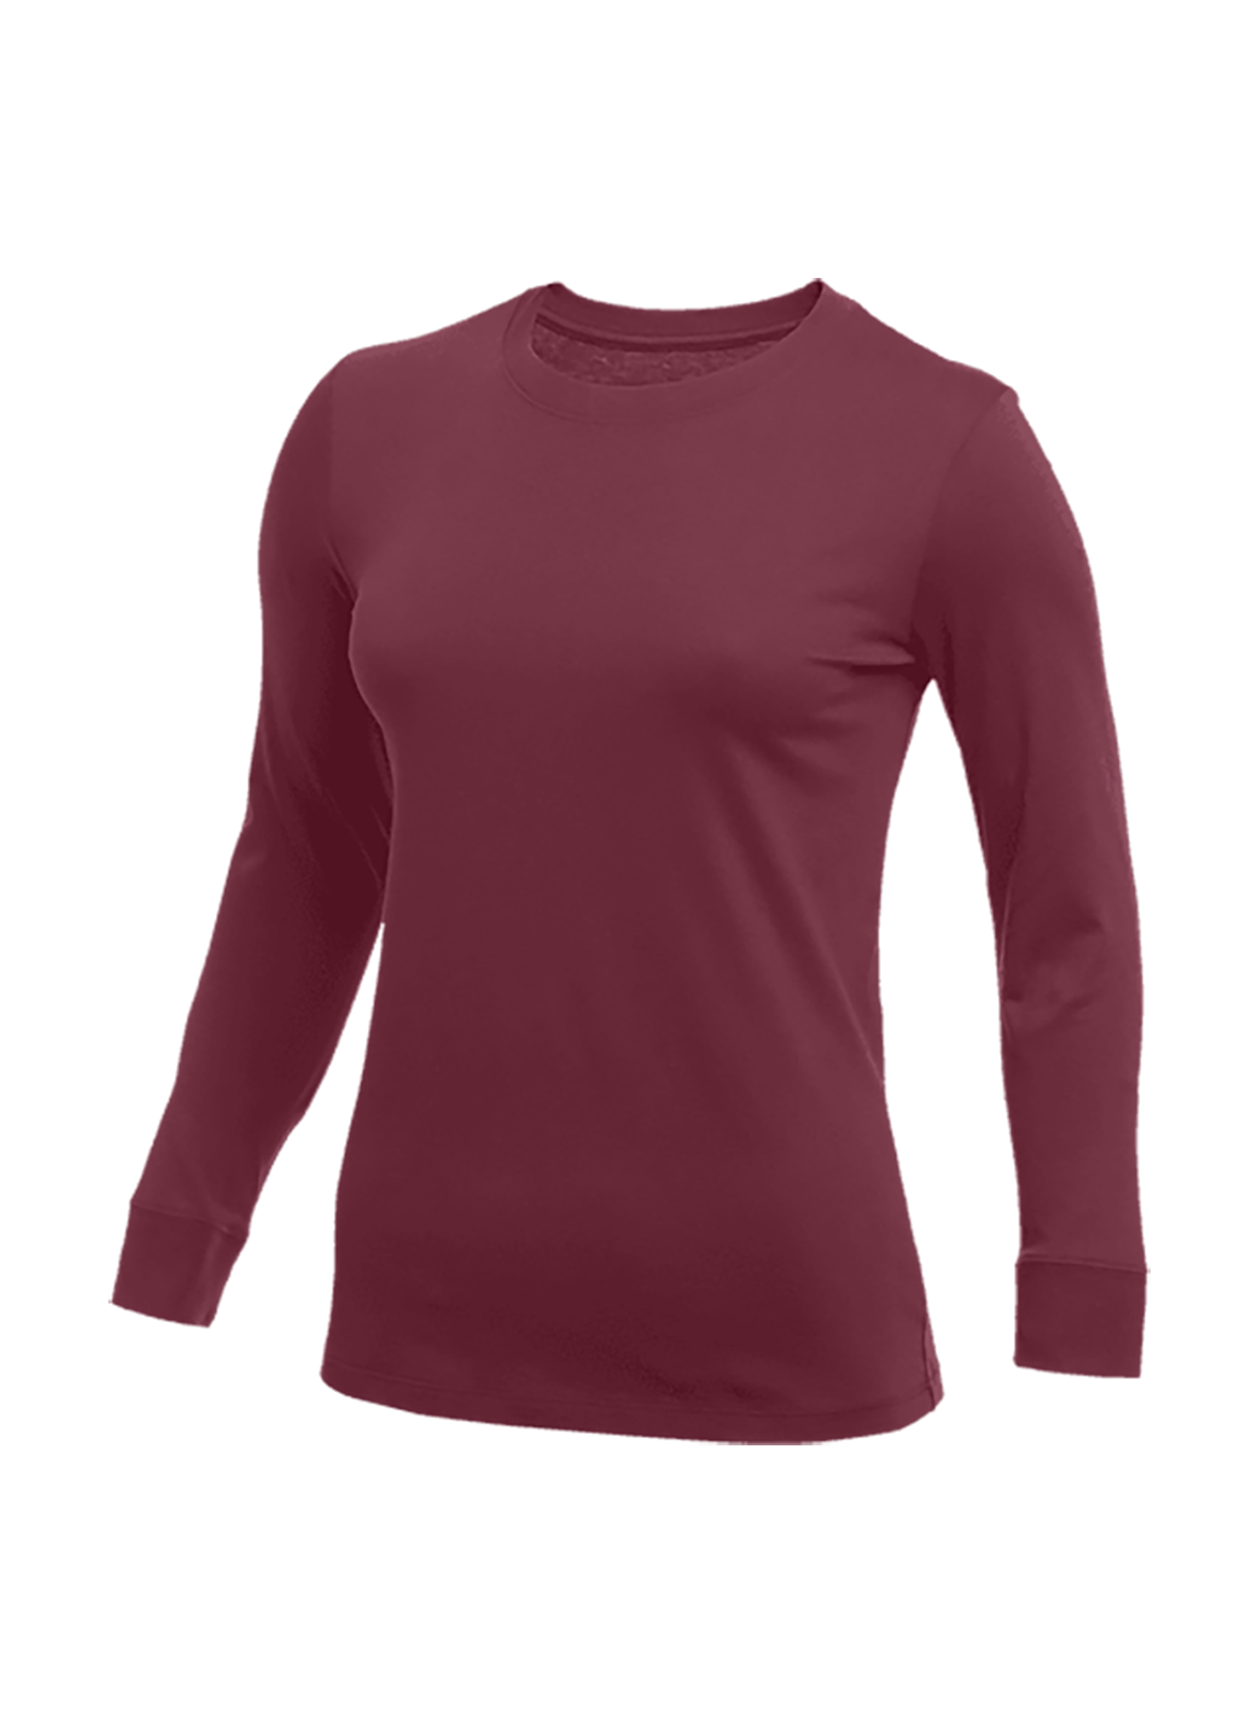 Nike Women's Team Maroon Long-Sleeve T-Shirt